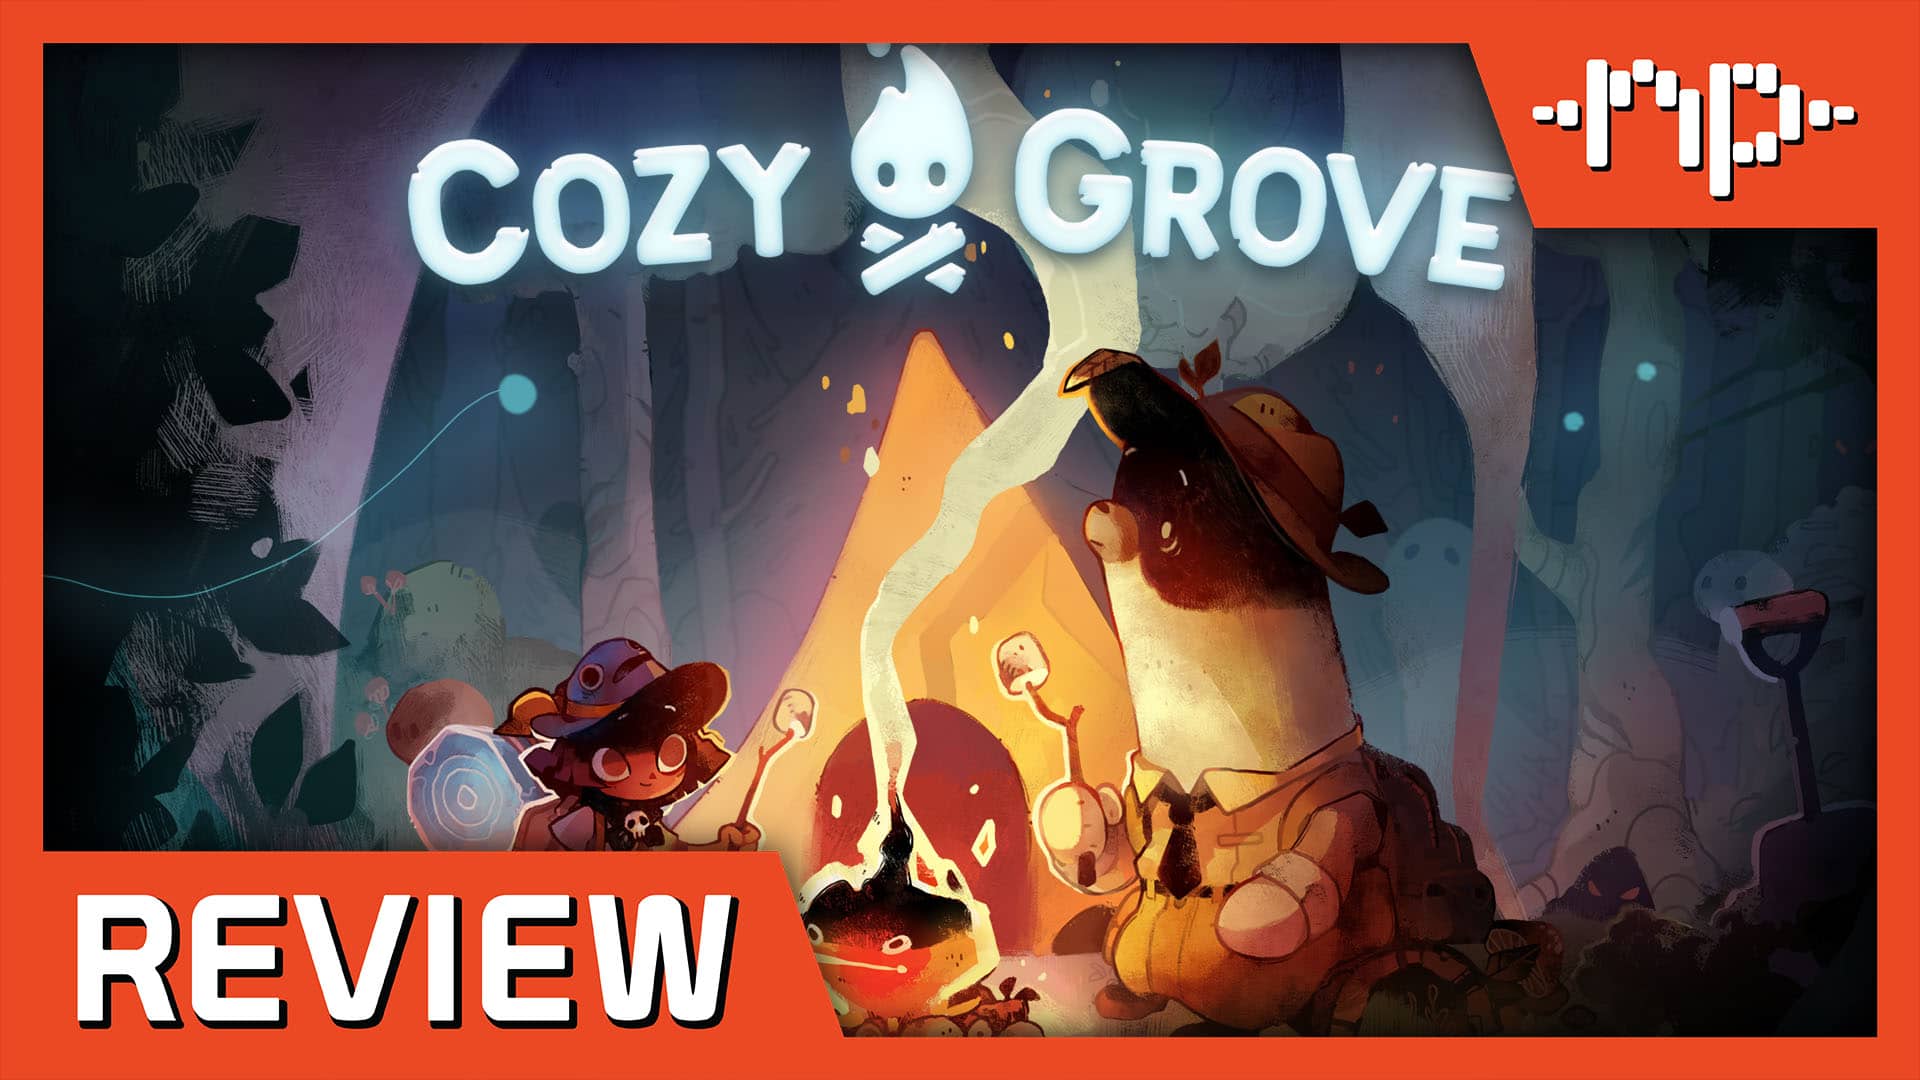 Cozy Grove Review – A Cozier Crossing